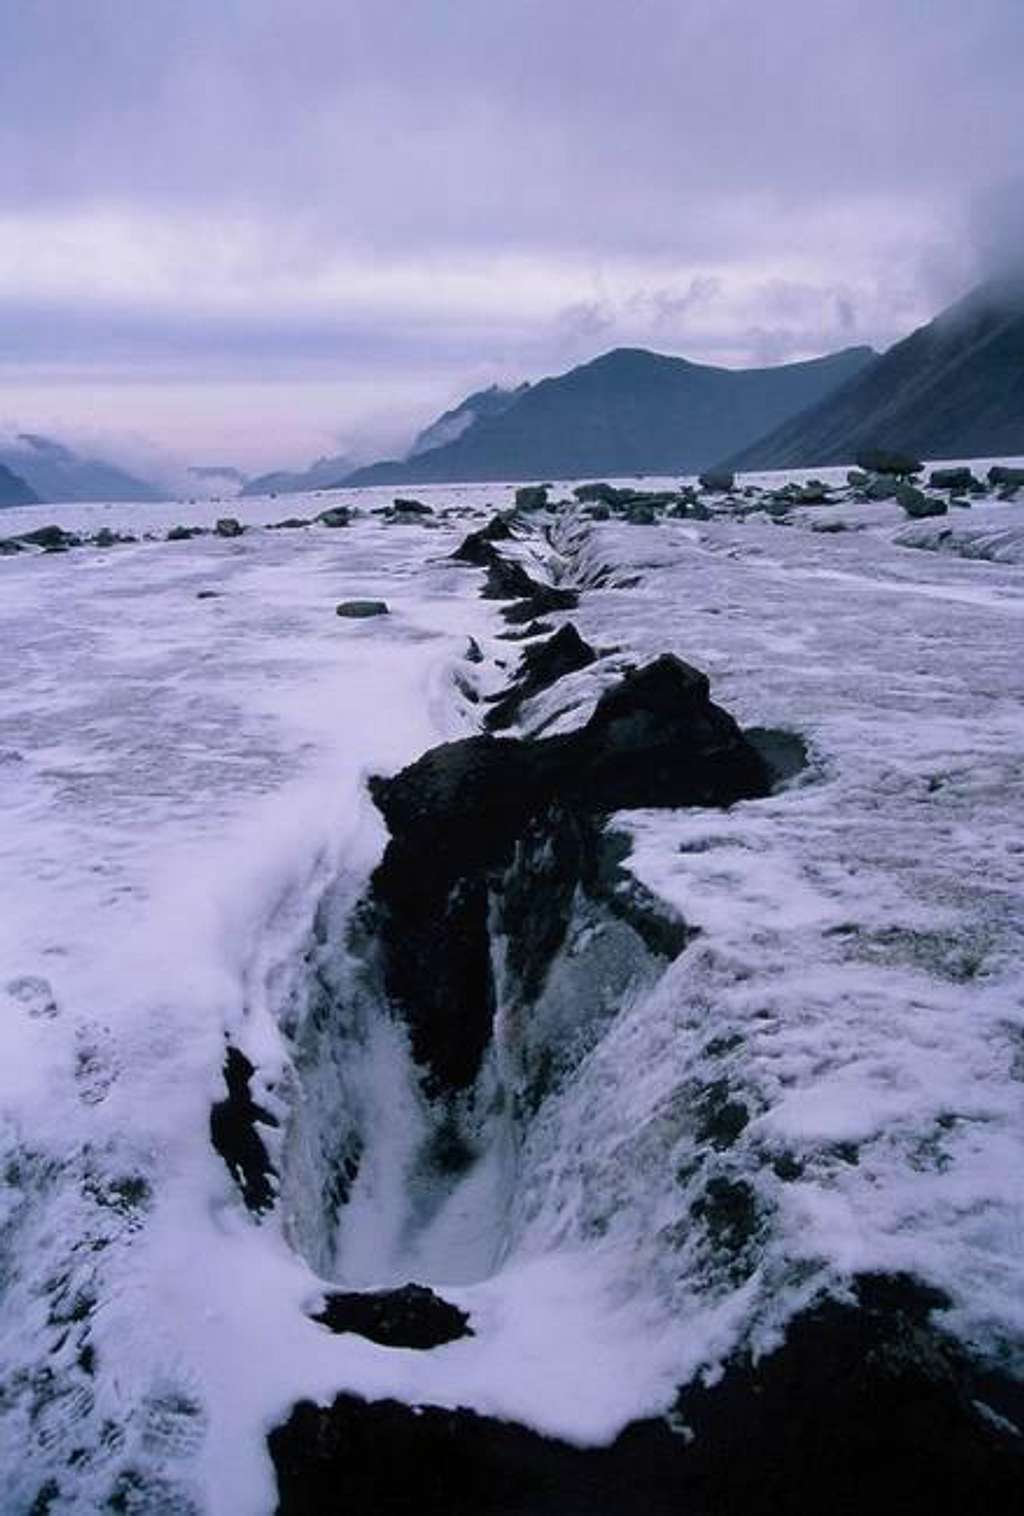 A crevasse on the glacier....